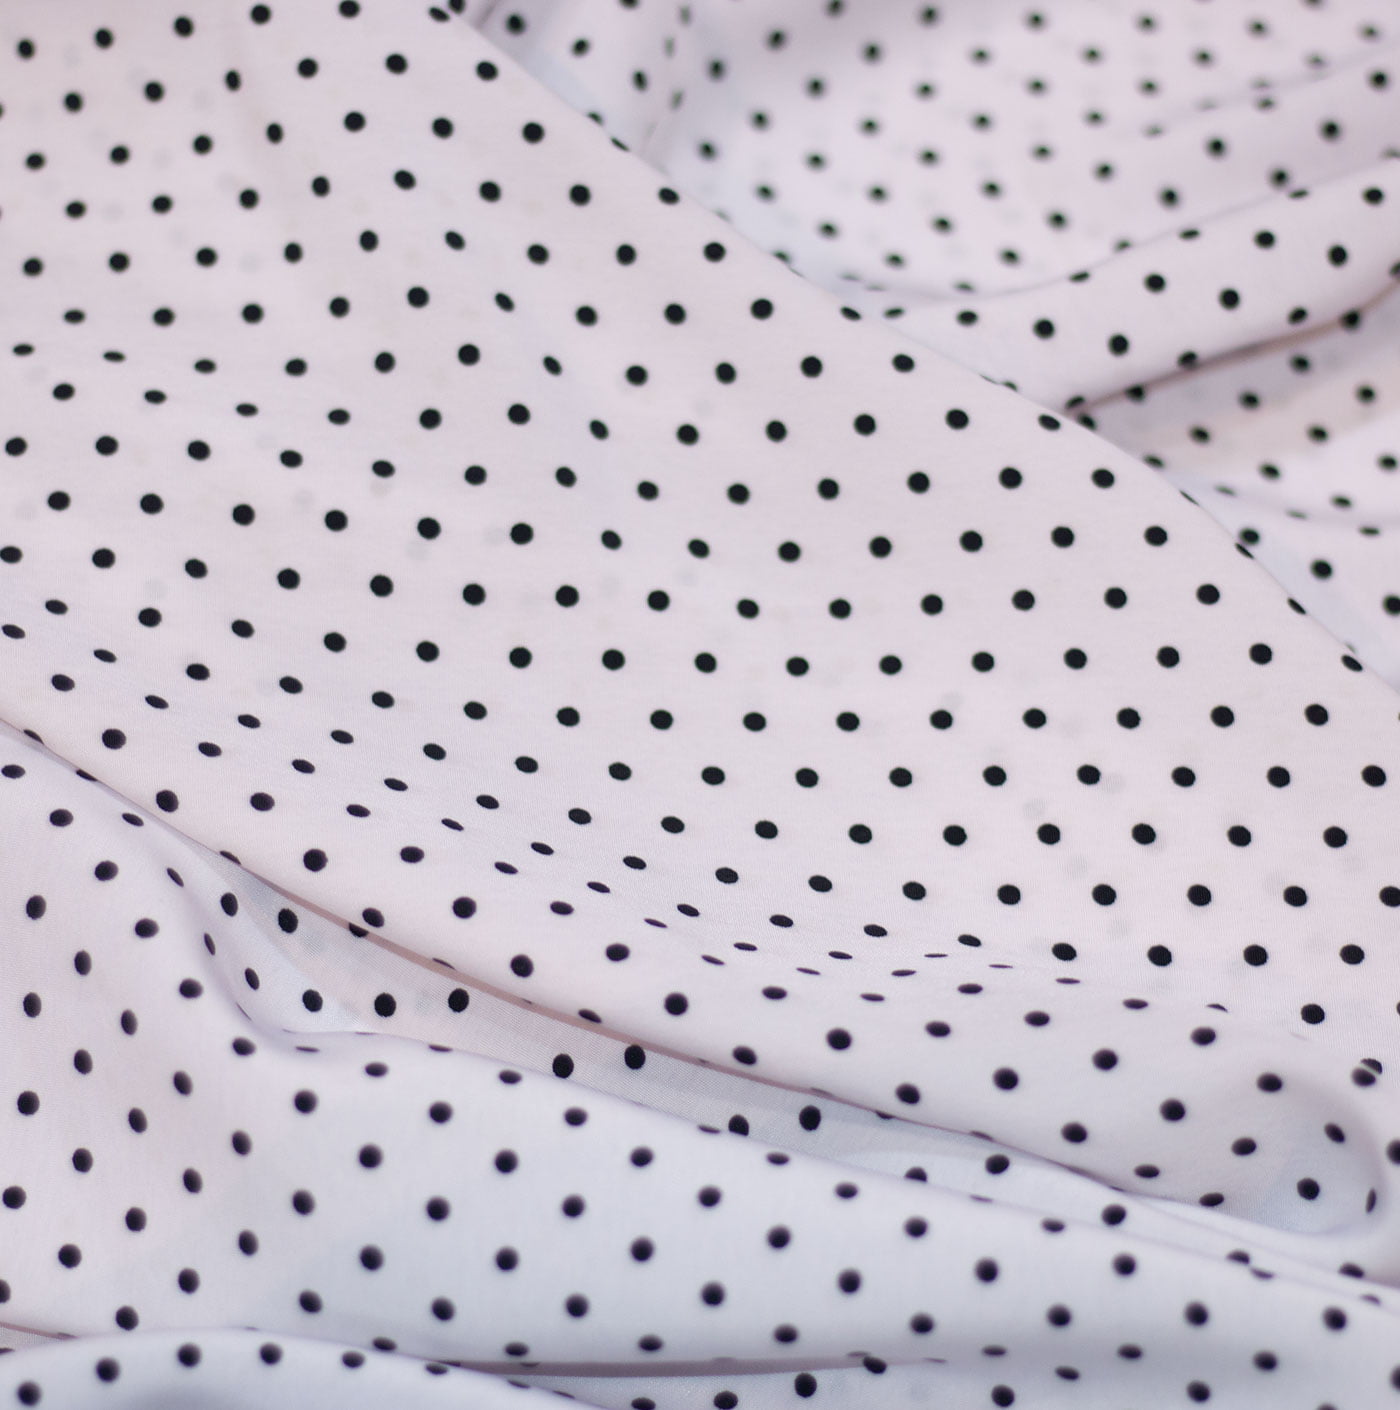 Black Polka Dots White Lorenzo Printed Cotton Fabric